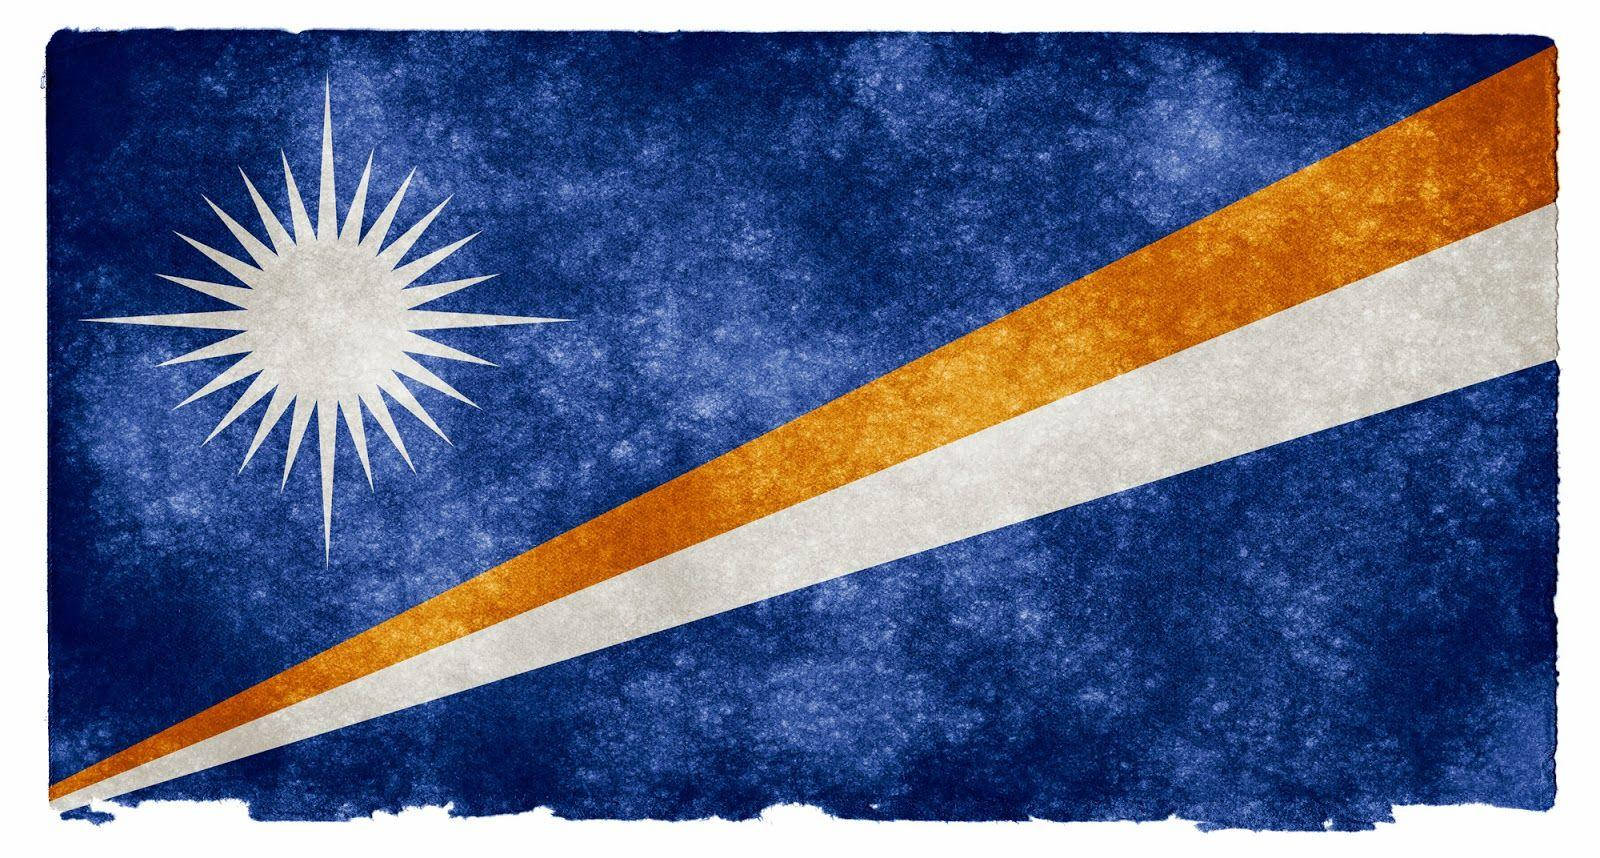 Marshallinseln-flagge Zerrissen Wallpaper